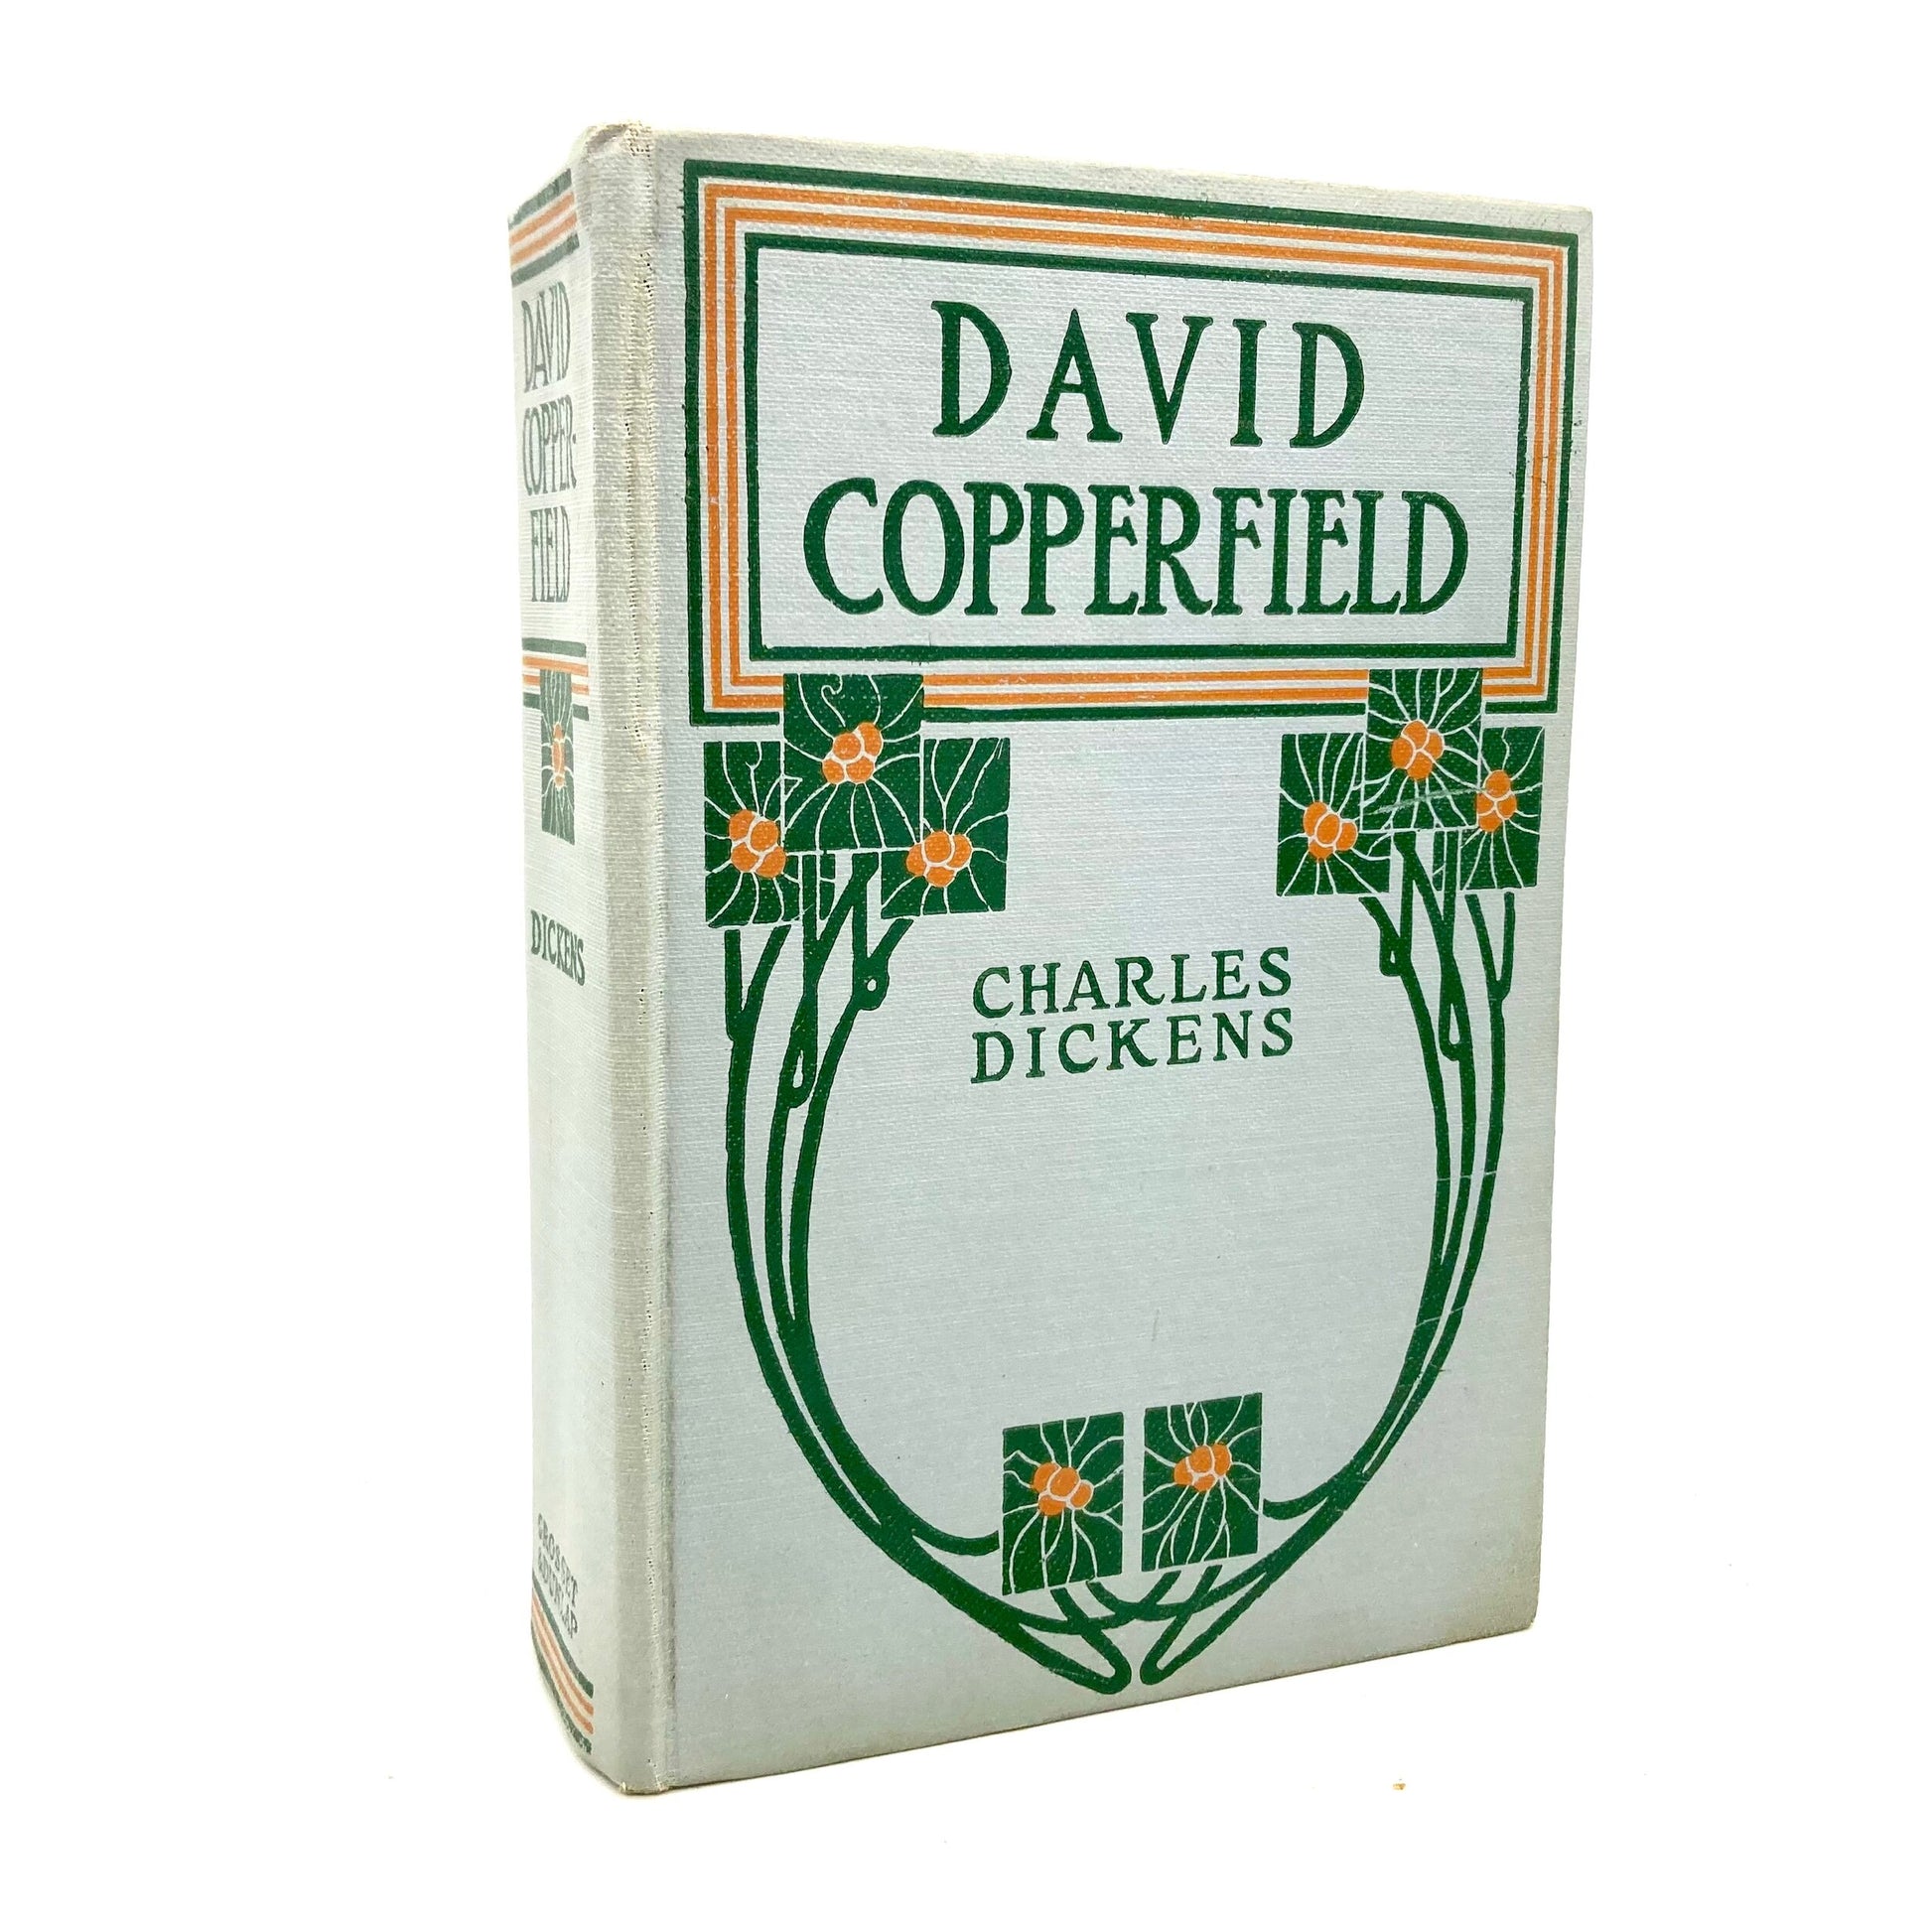 DICKENS, Charles "David Copperfield" [Grosset & Dunlap, c1930] - Buzz Bookstore